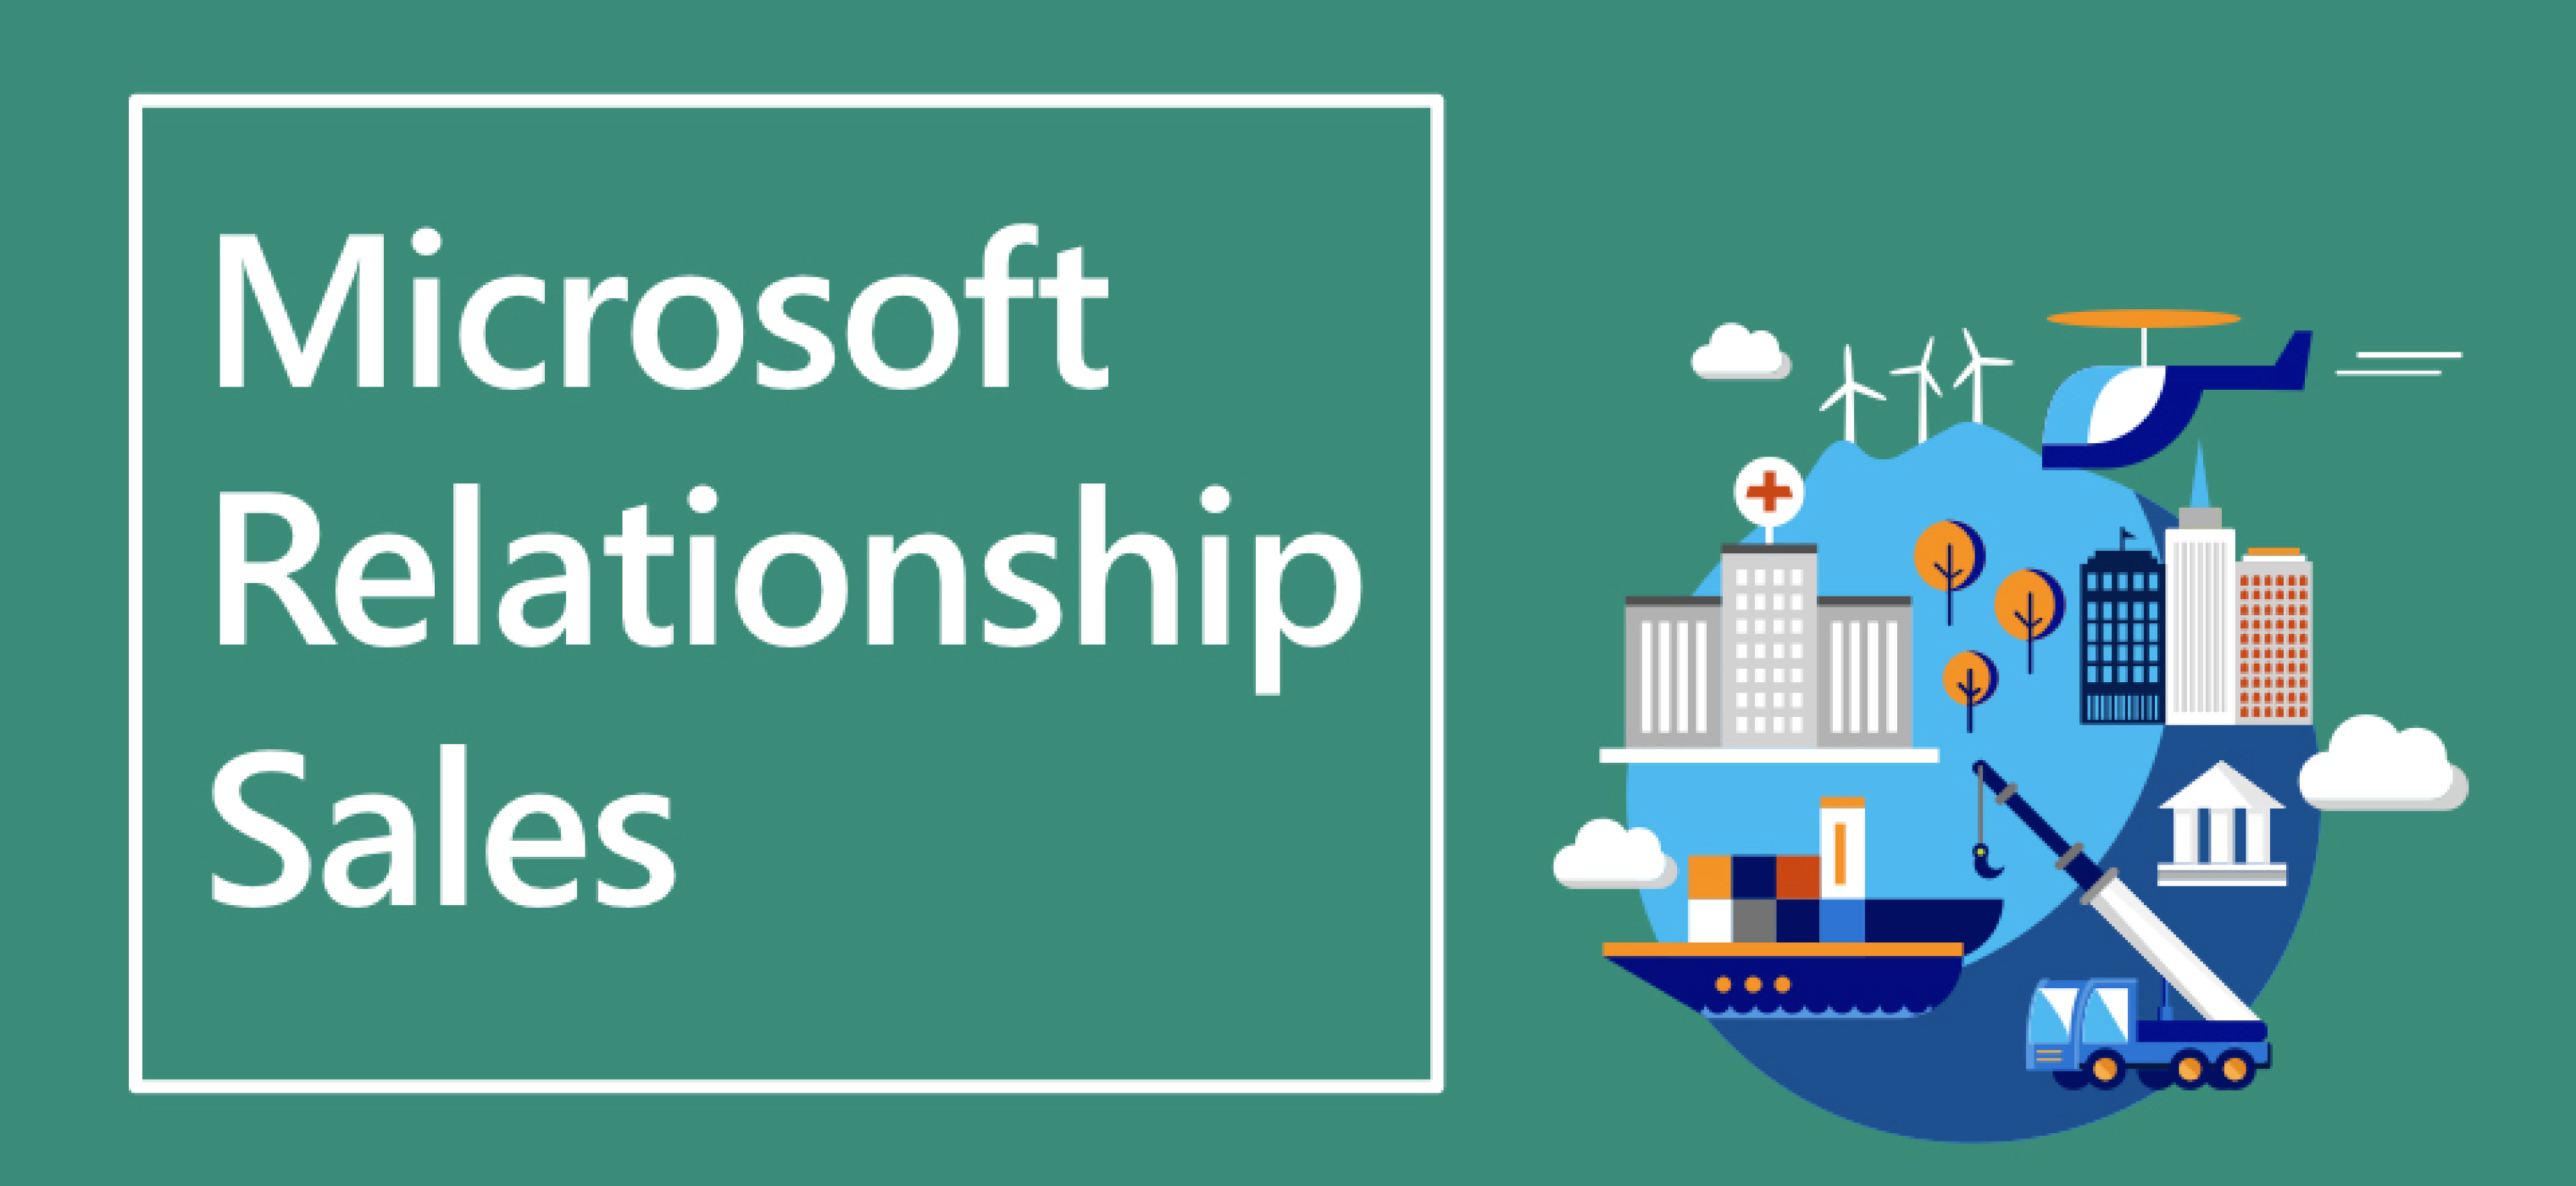 Microsoft Relationship Sales